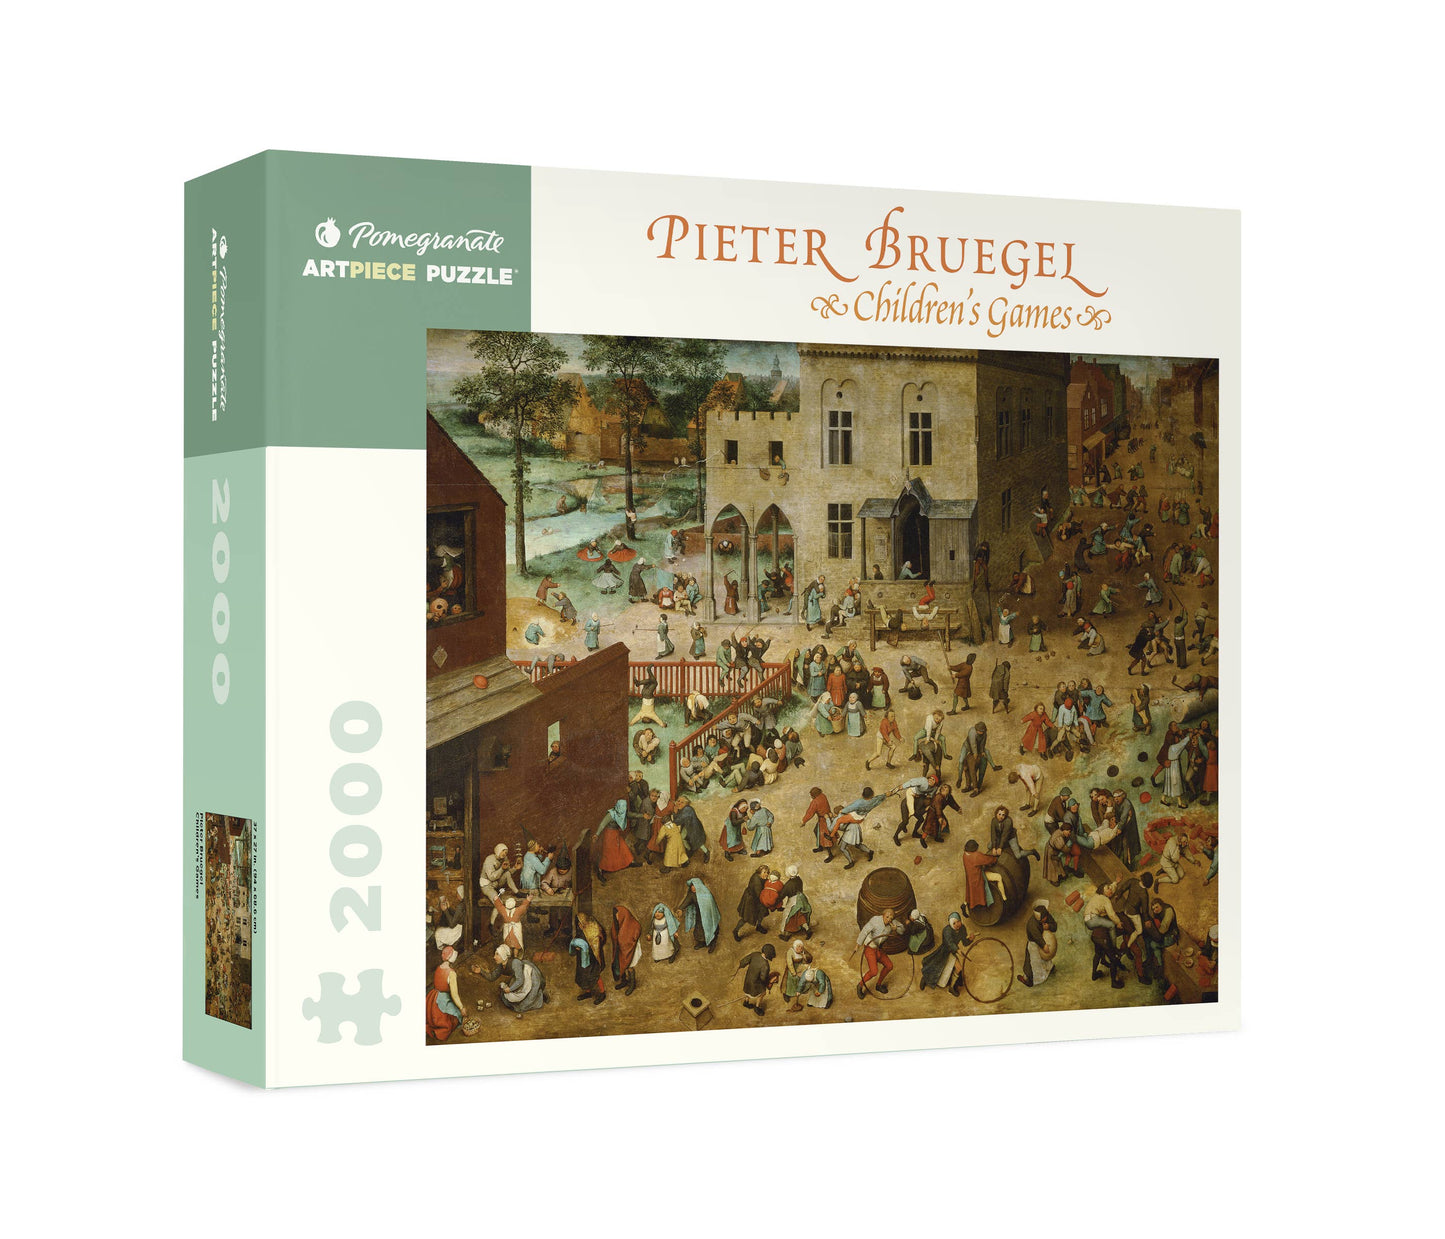 Pomegranate - Pieter Bruegel: Children’s Games - 2000 Piece Jigsaw Puzzle